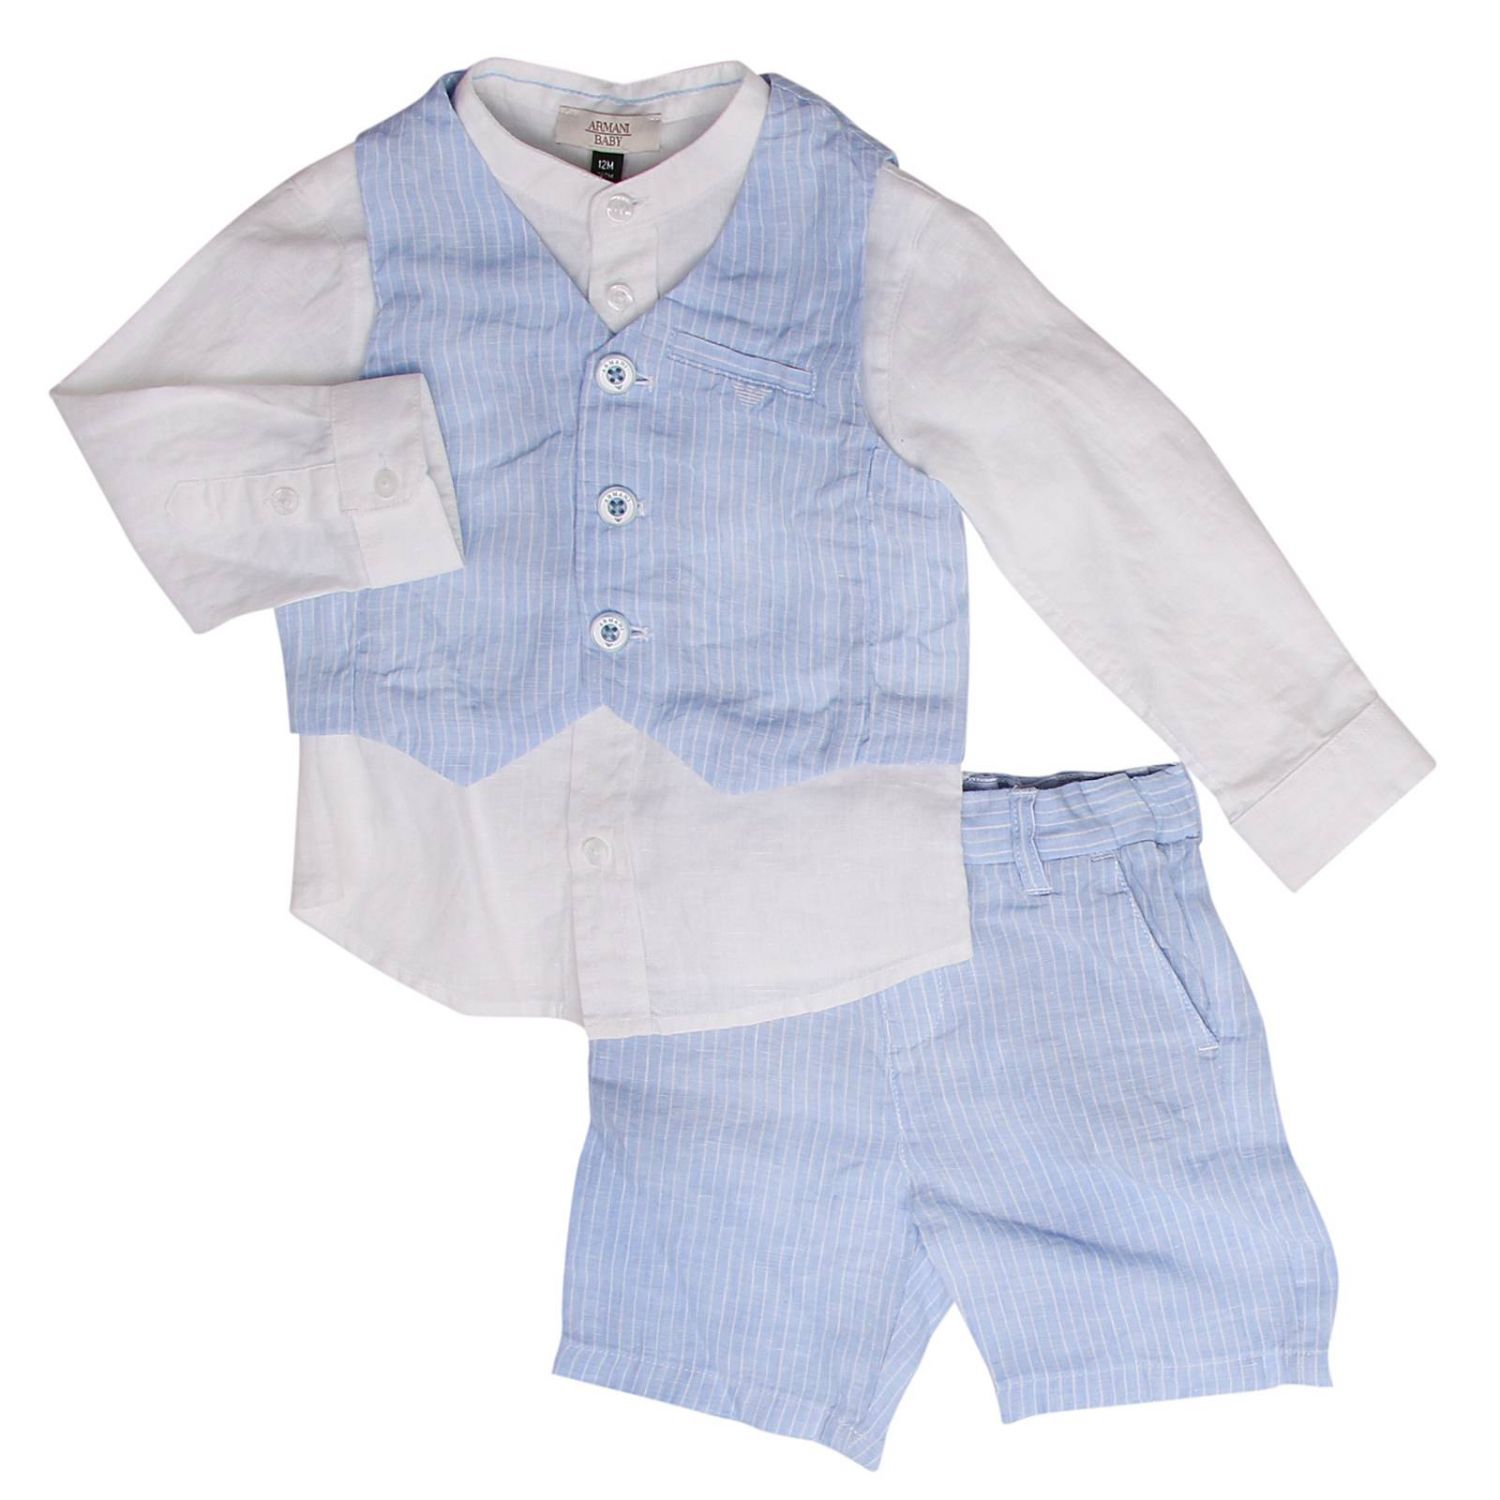 newborn armani clothes